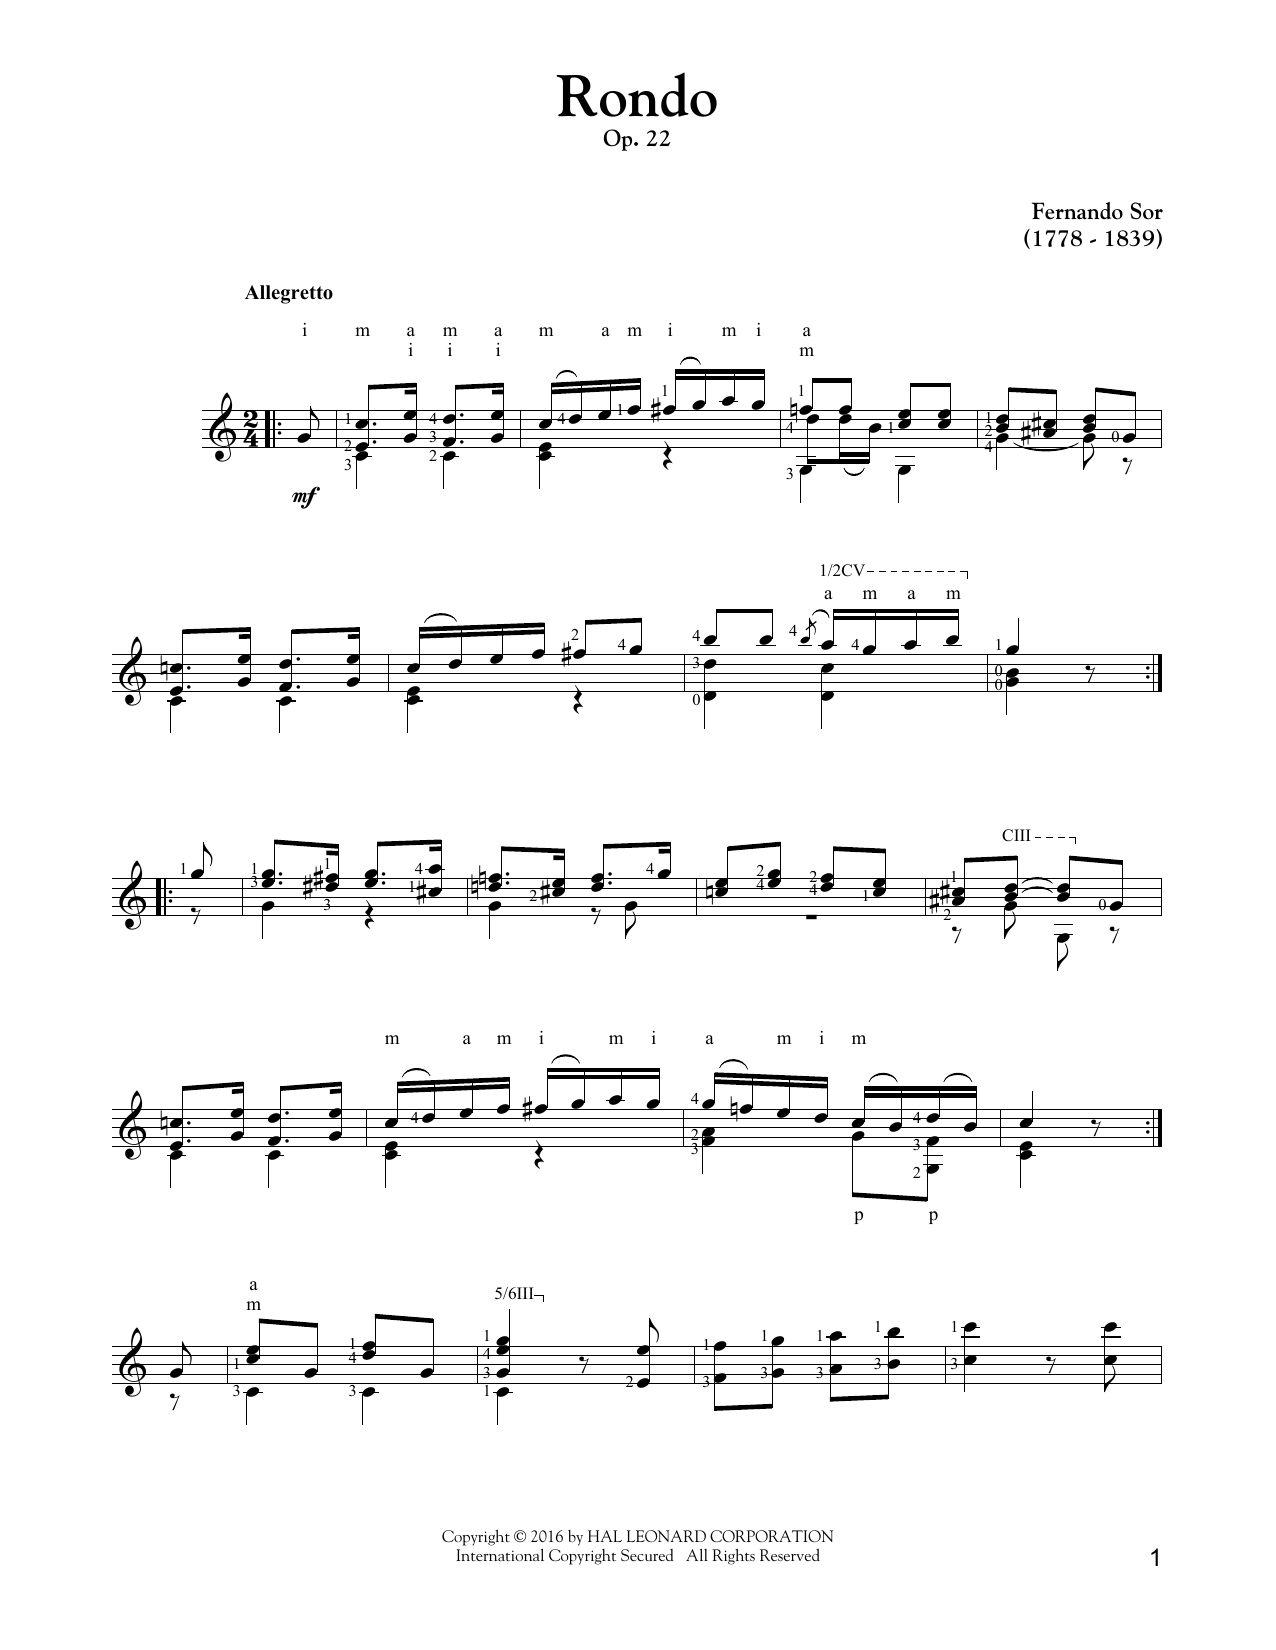 Fernando Sor Rondo, Op. 22 sheet music notes and chords arranged for Solo Guitar